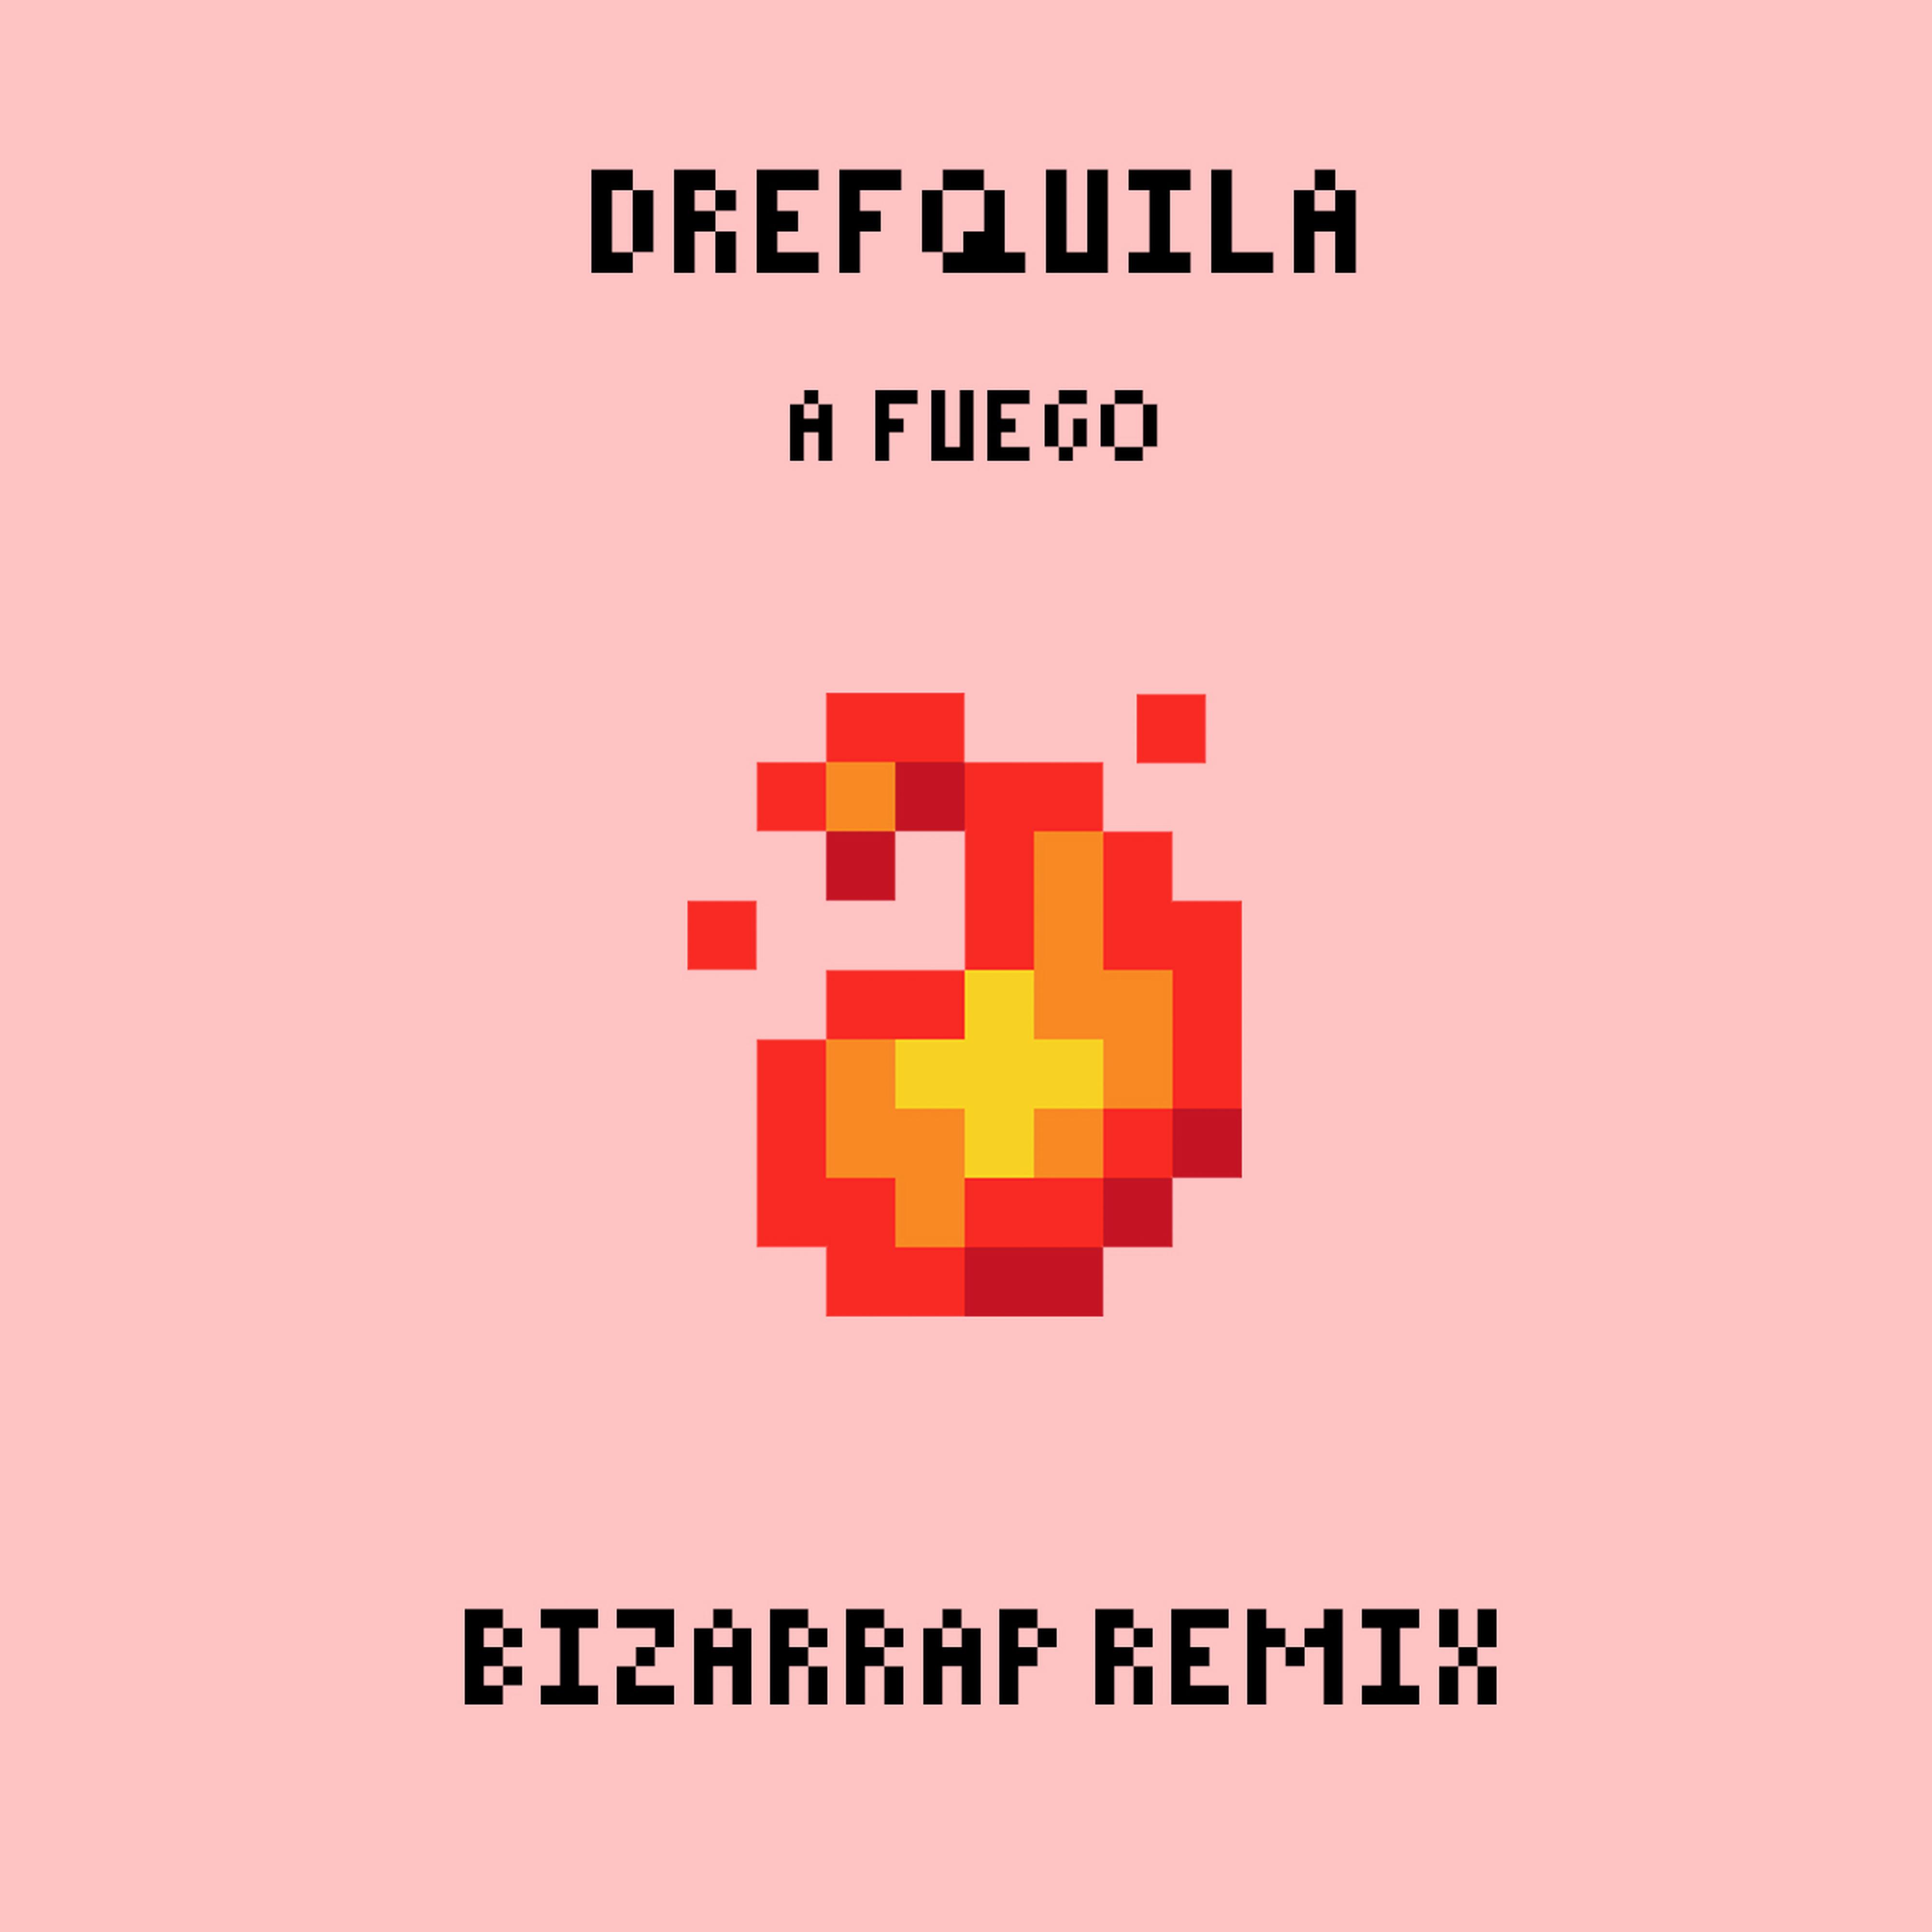 A fuego (Remix)